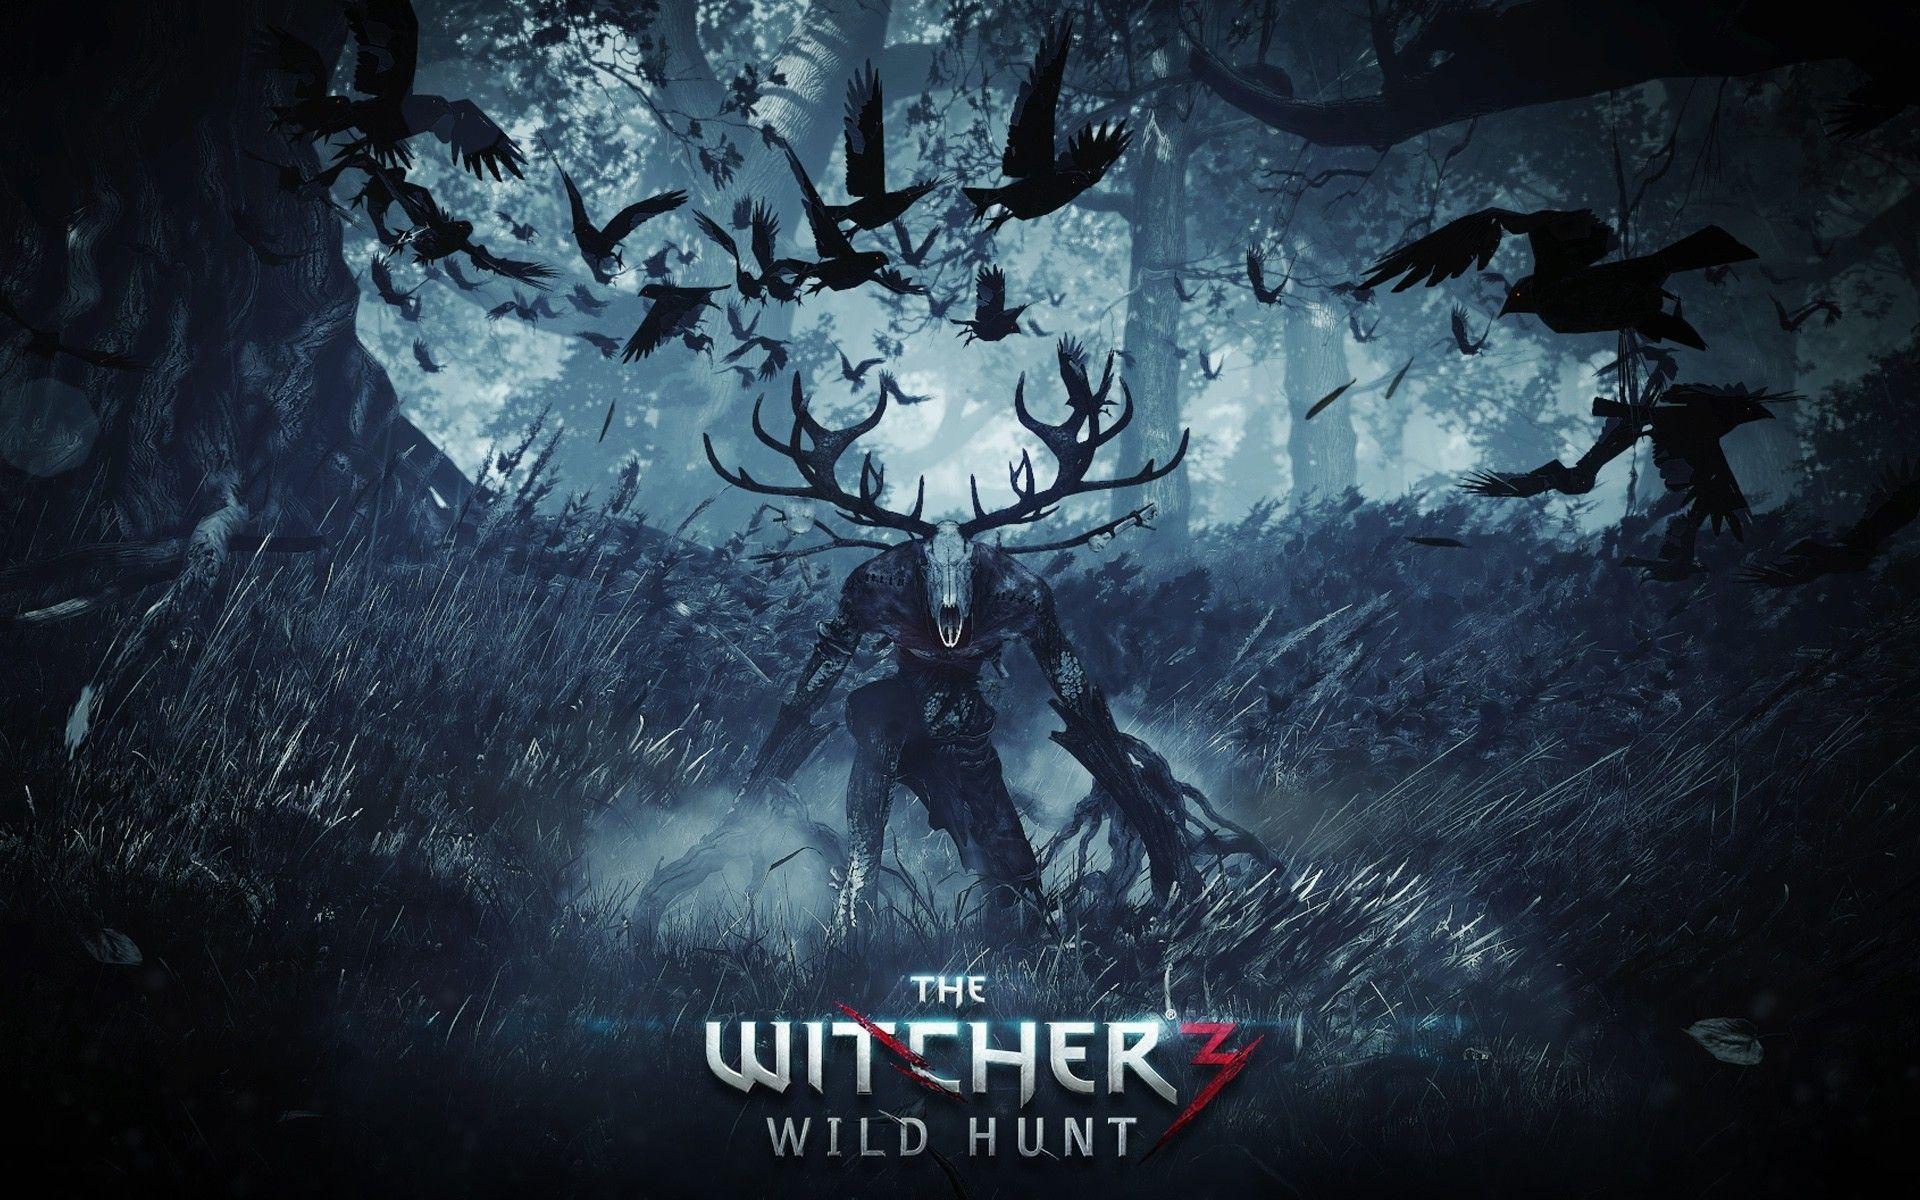 Witcher 3 wallpaper